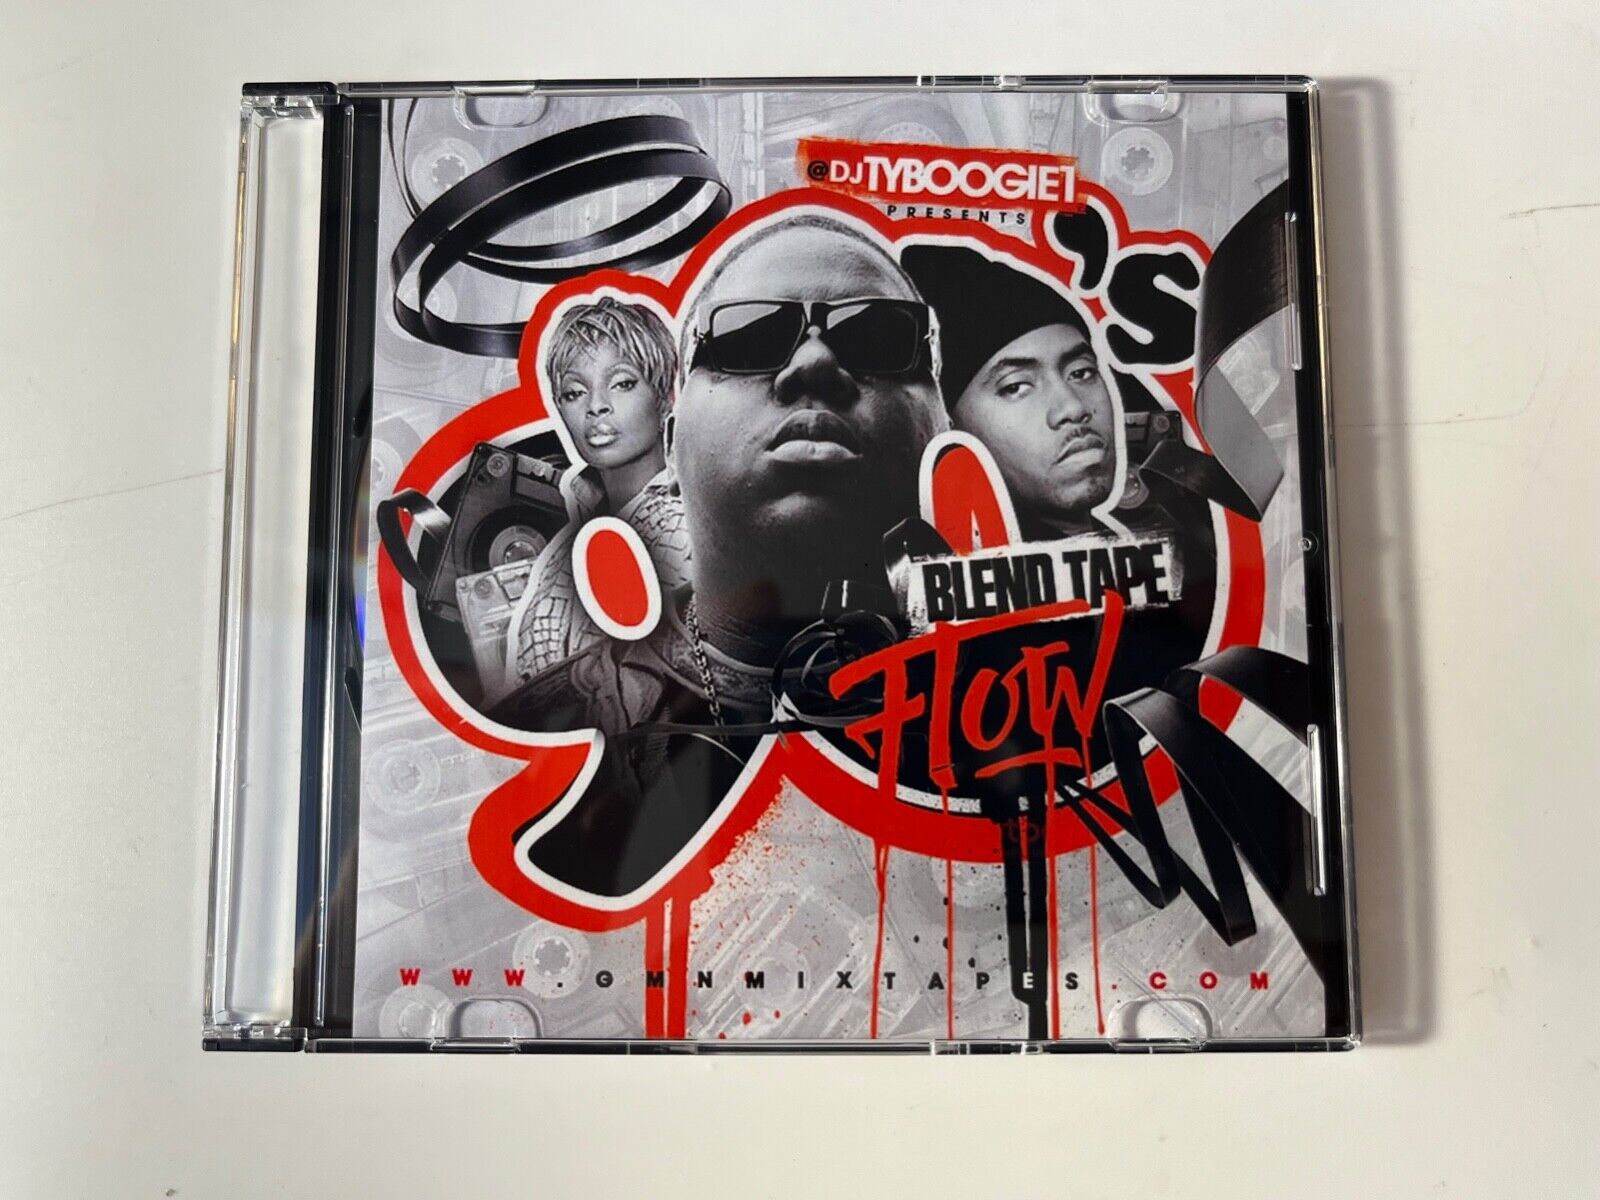 DJ TY BOOGIE 90s BLEND TAPE FLOW OLD SCHOOL Hip Hop NYC PROMO MIXTAPE MIX CD